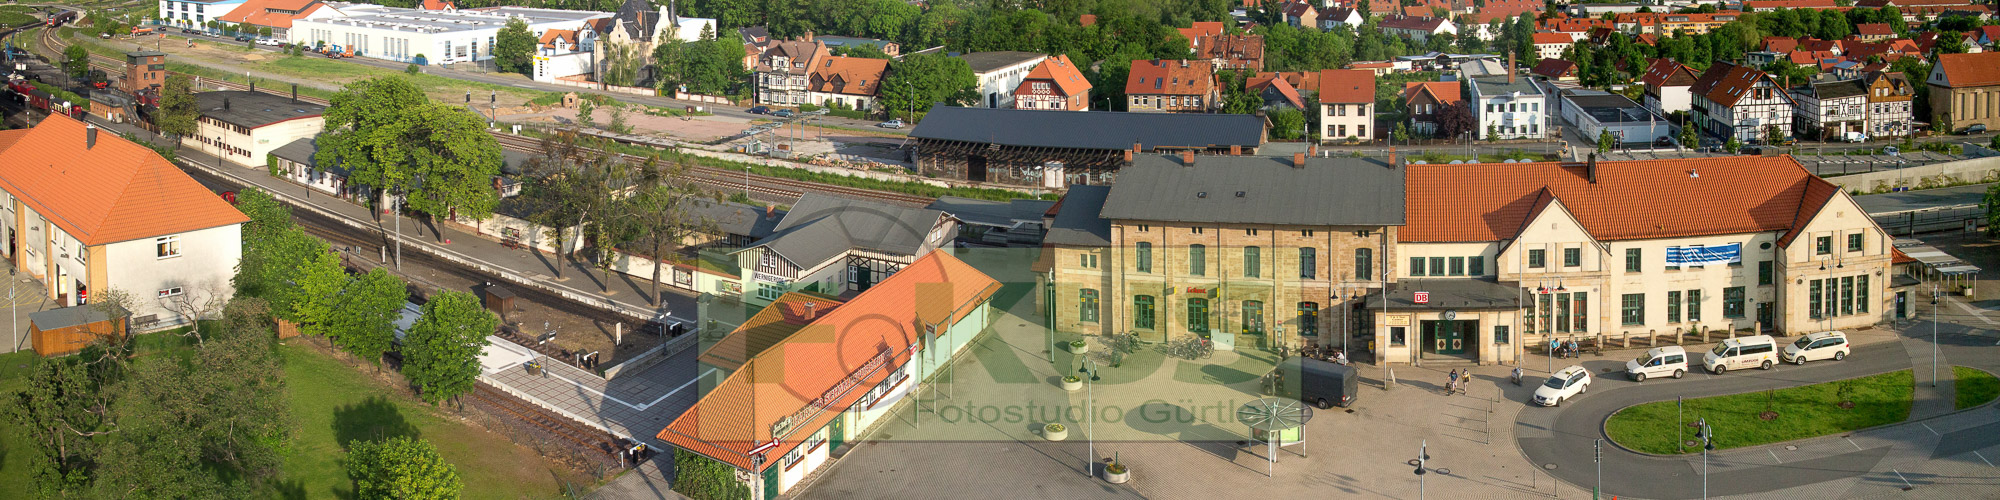 Bahnhof Wernigerode Panorama Luftbild